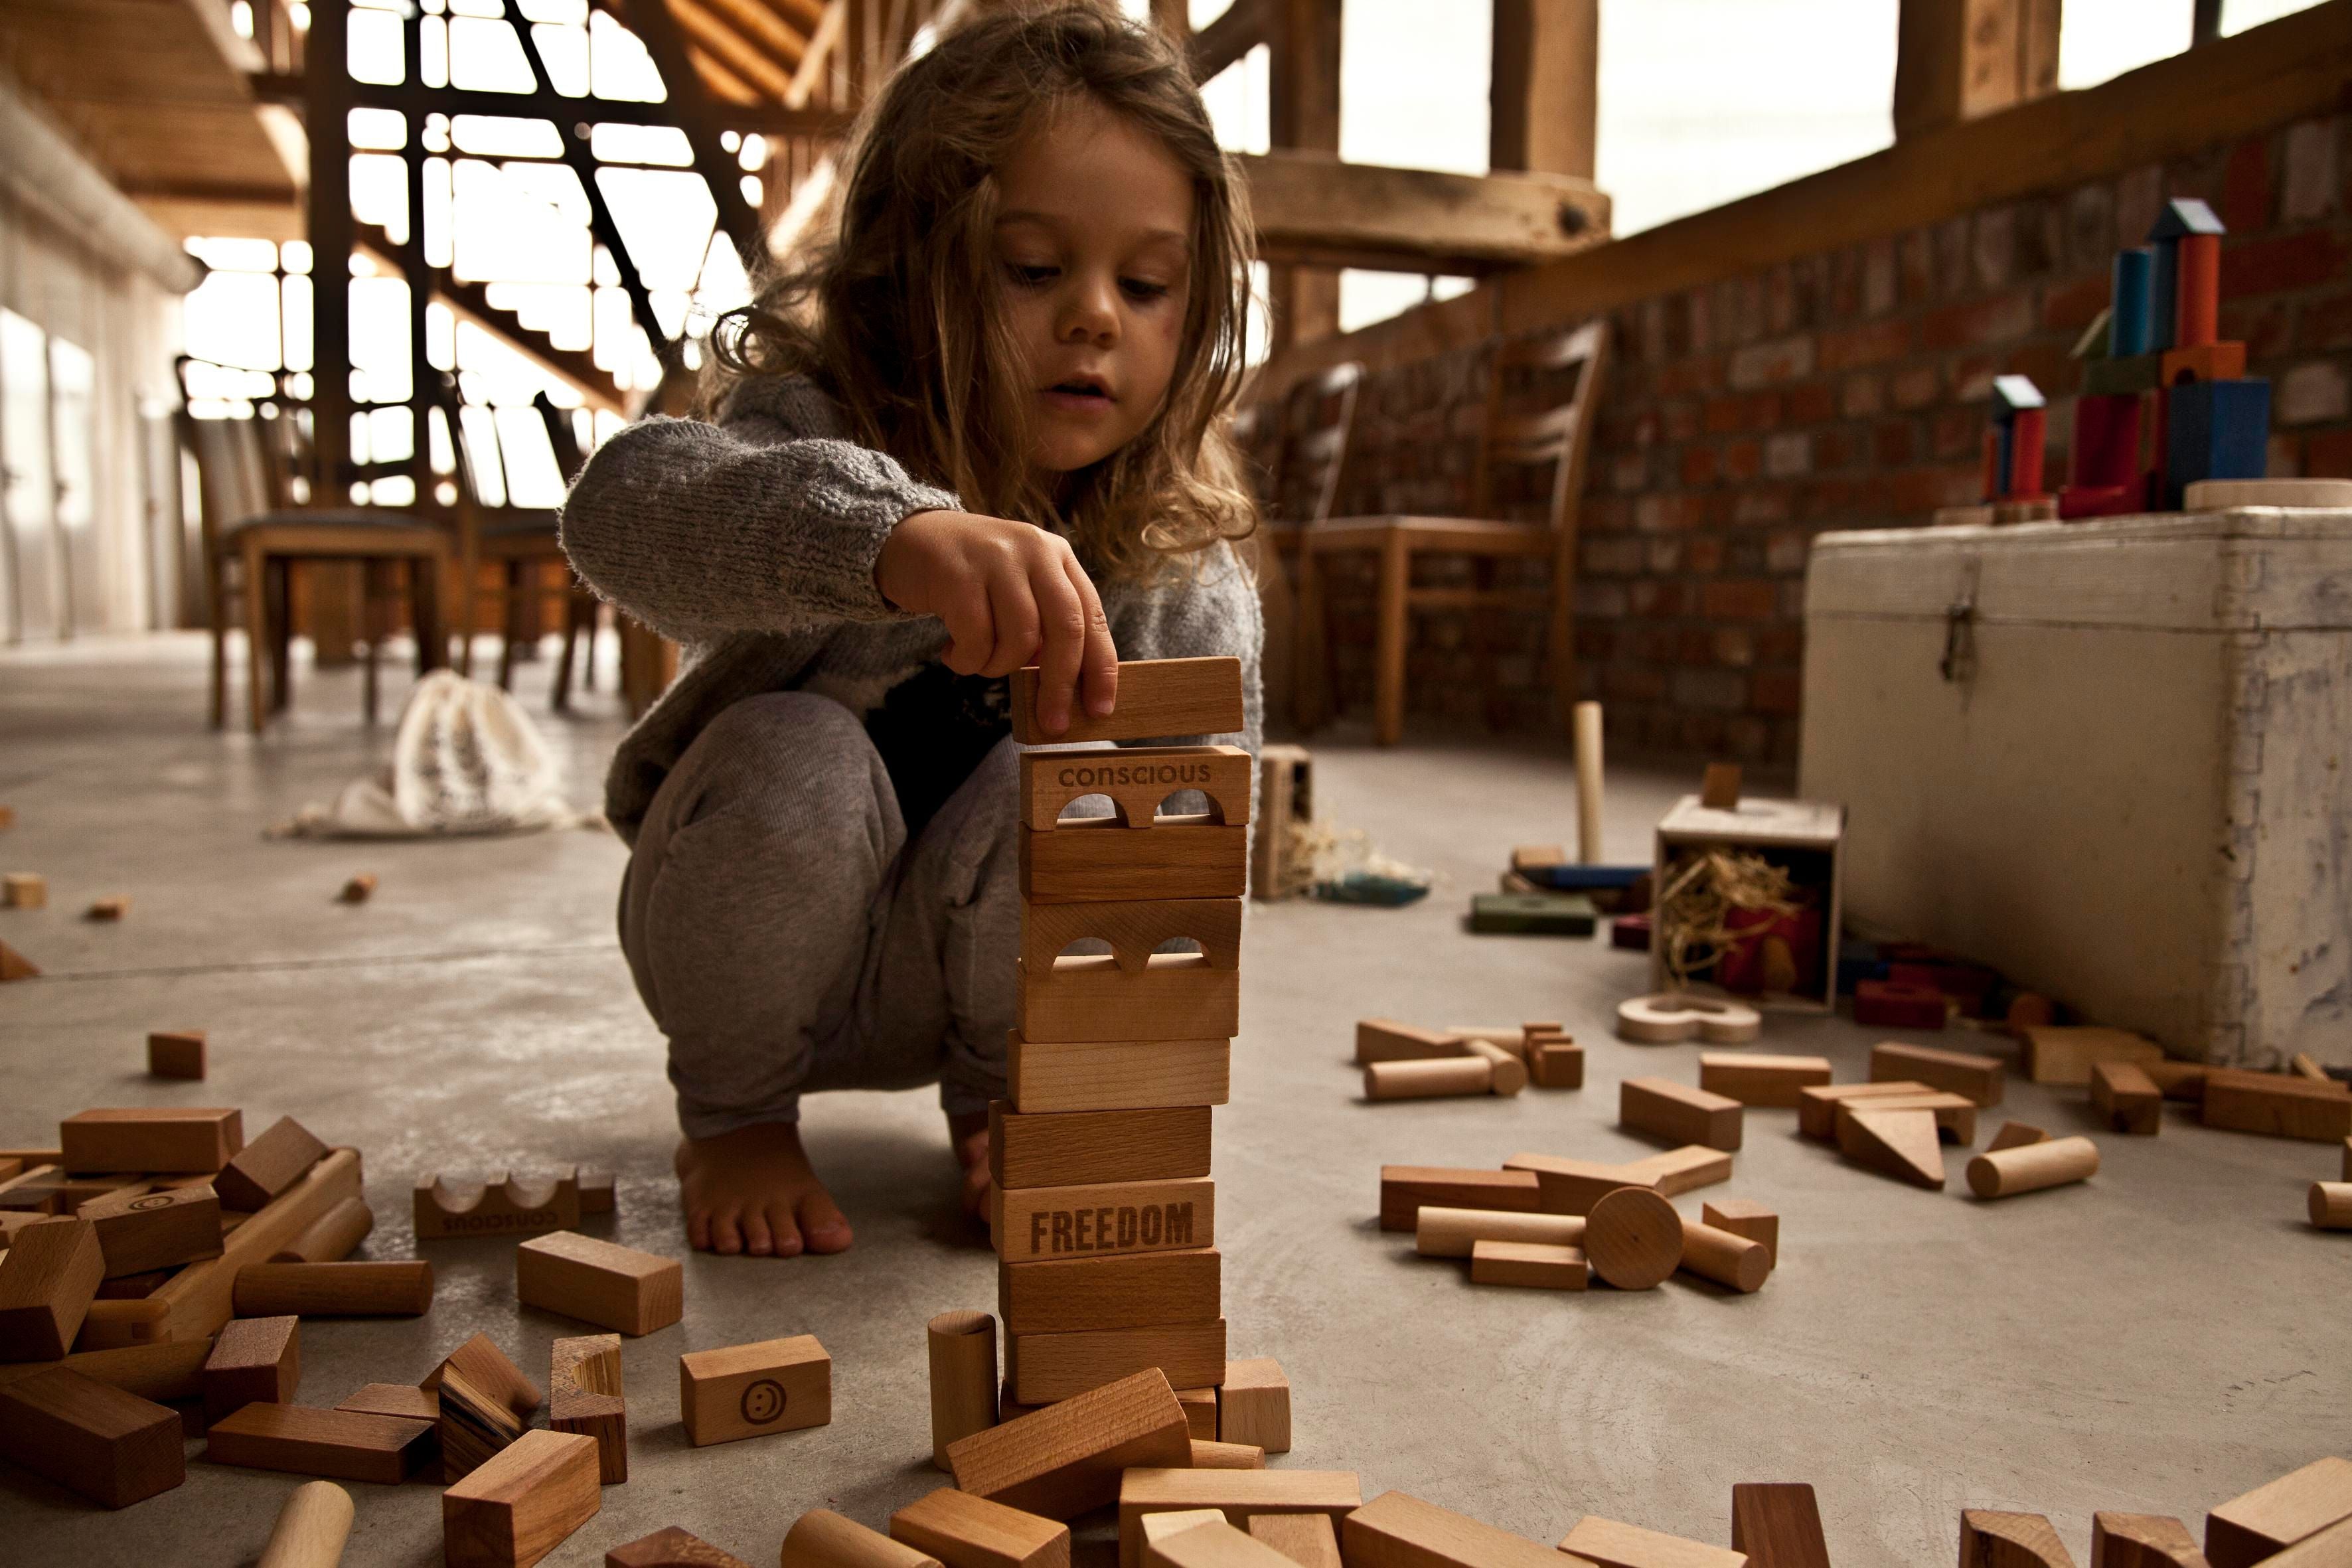 How Wooden Blocks Promote Child Development